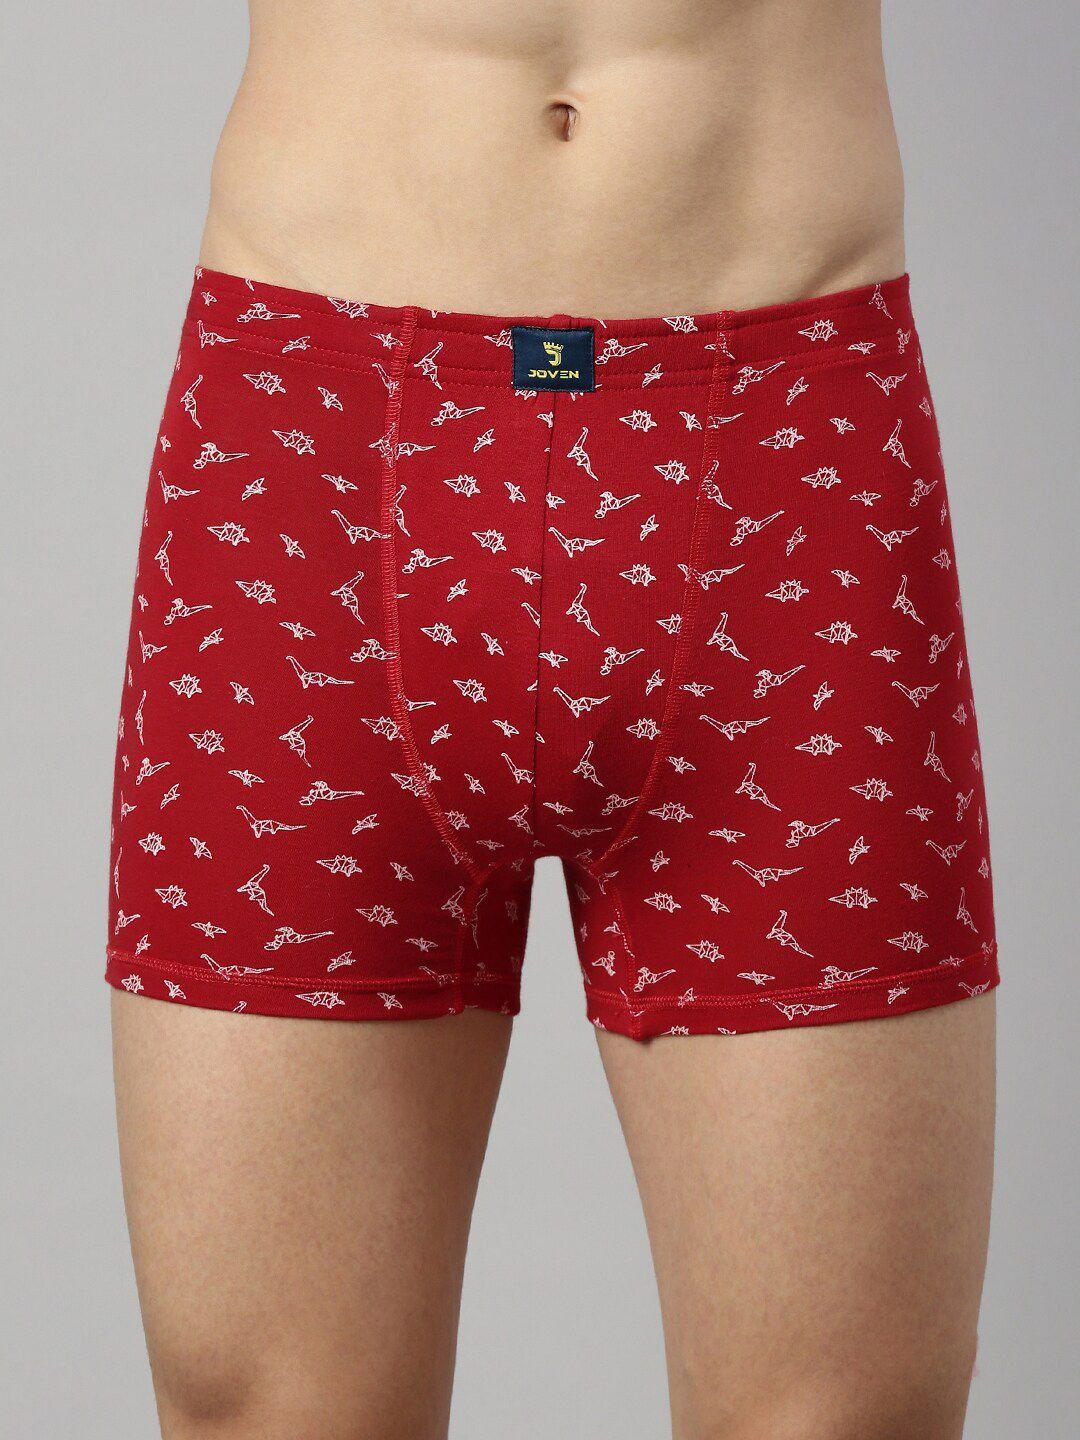 joven-men-red-printed-cotton-neo-trunks-s22-taop-dp